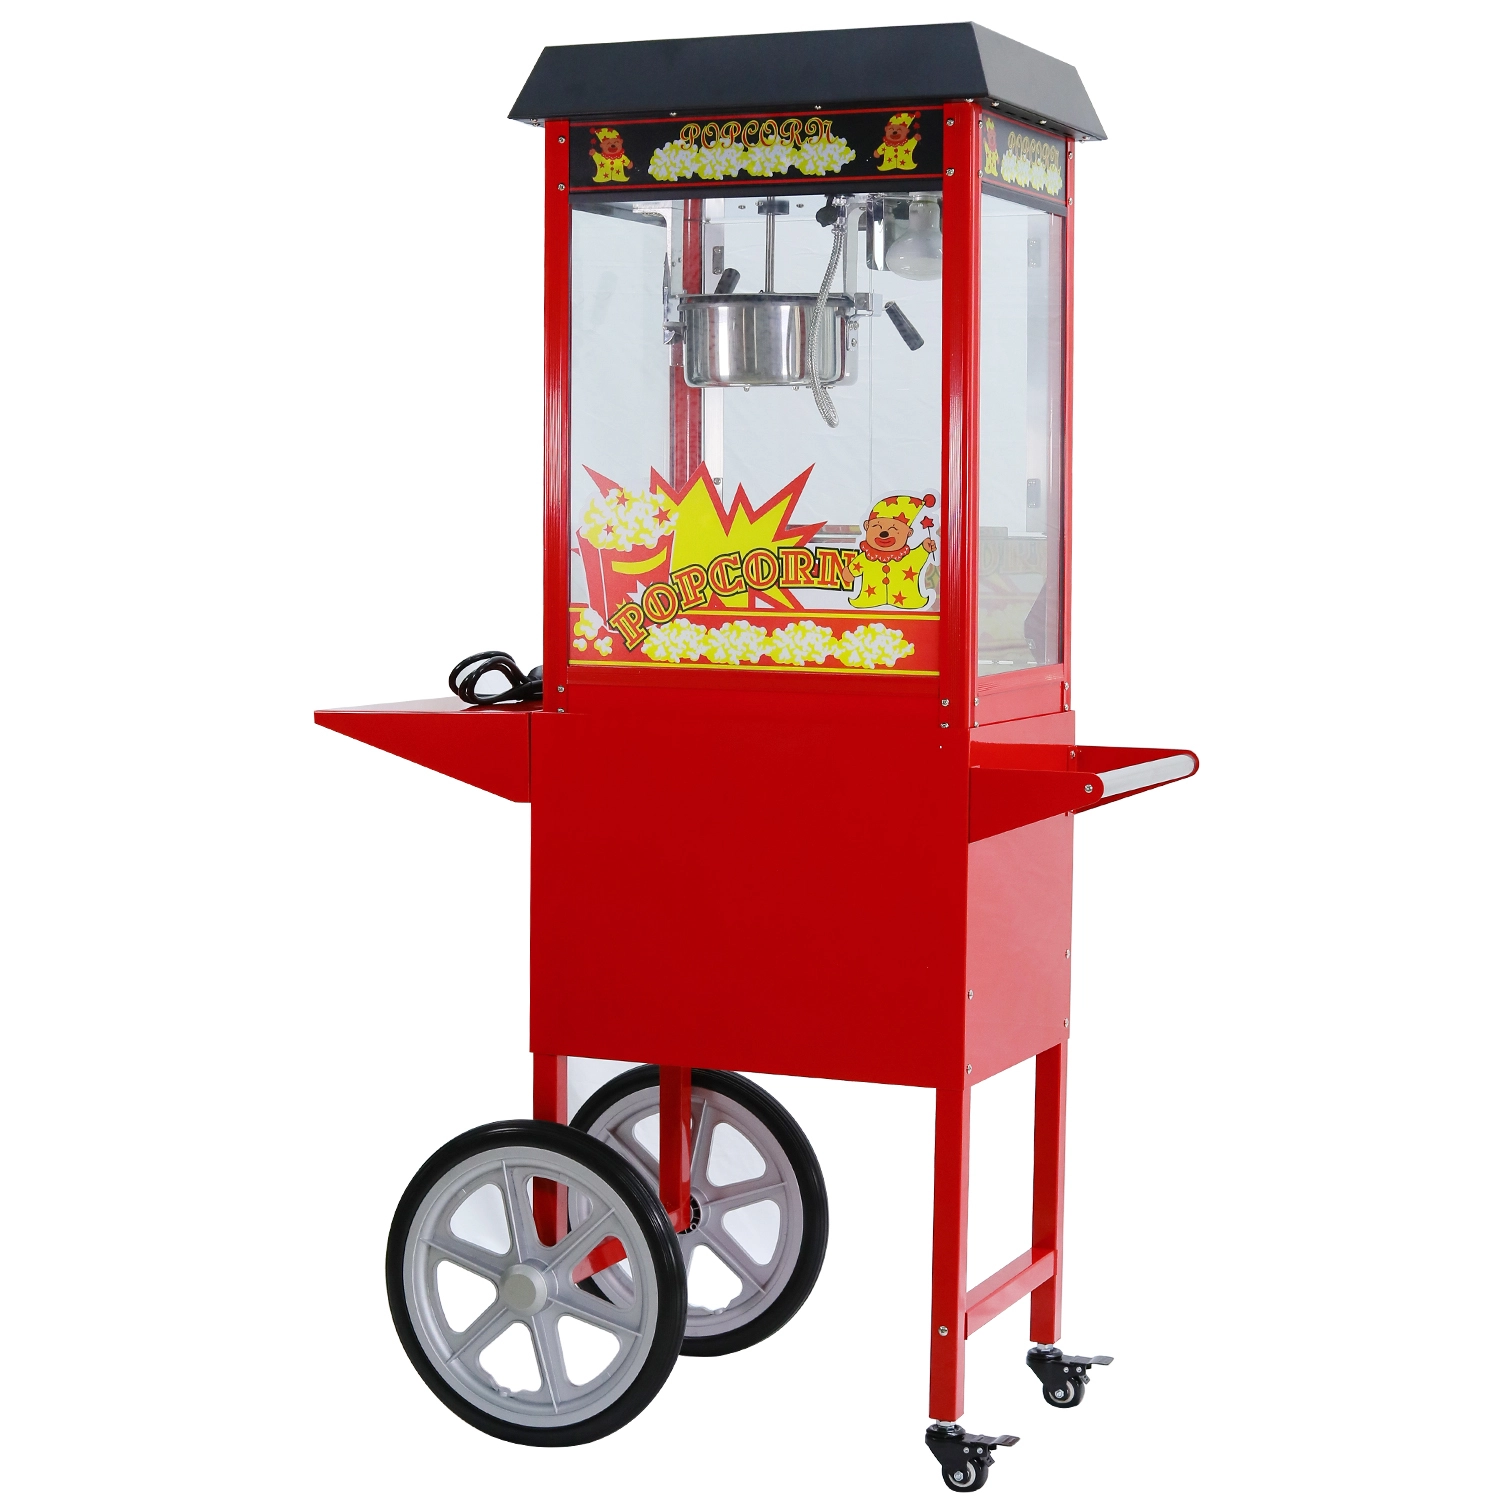 8Oz Popcorn Machine Maker on the wheeled Cart Deck Warmer